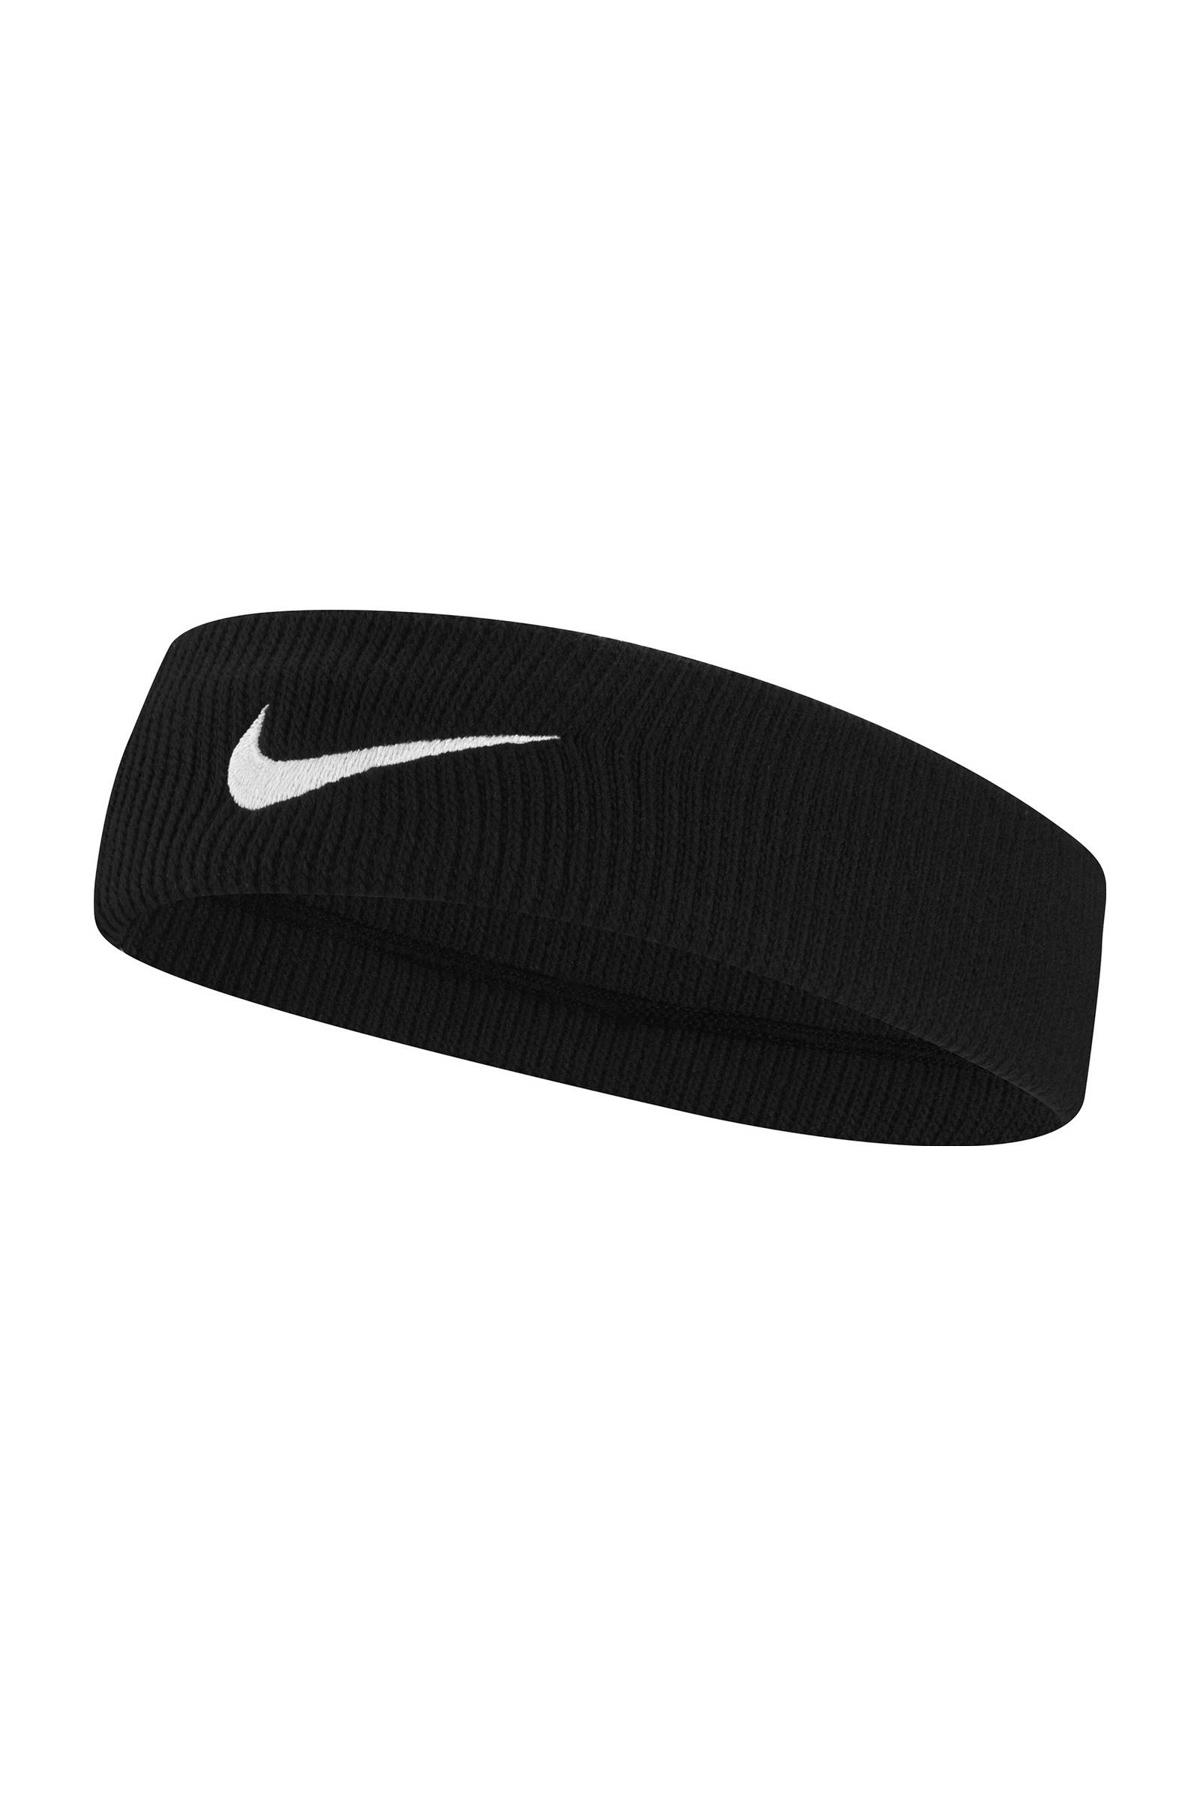 aanraken Pakket impuls Nike hoofdband Elite zwart/wit | wehkamp